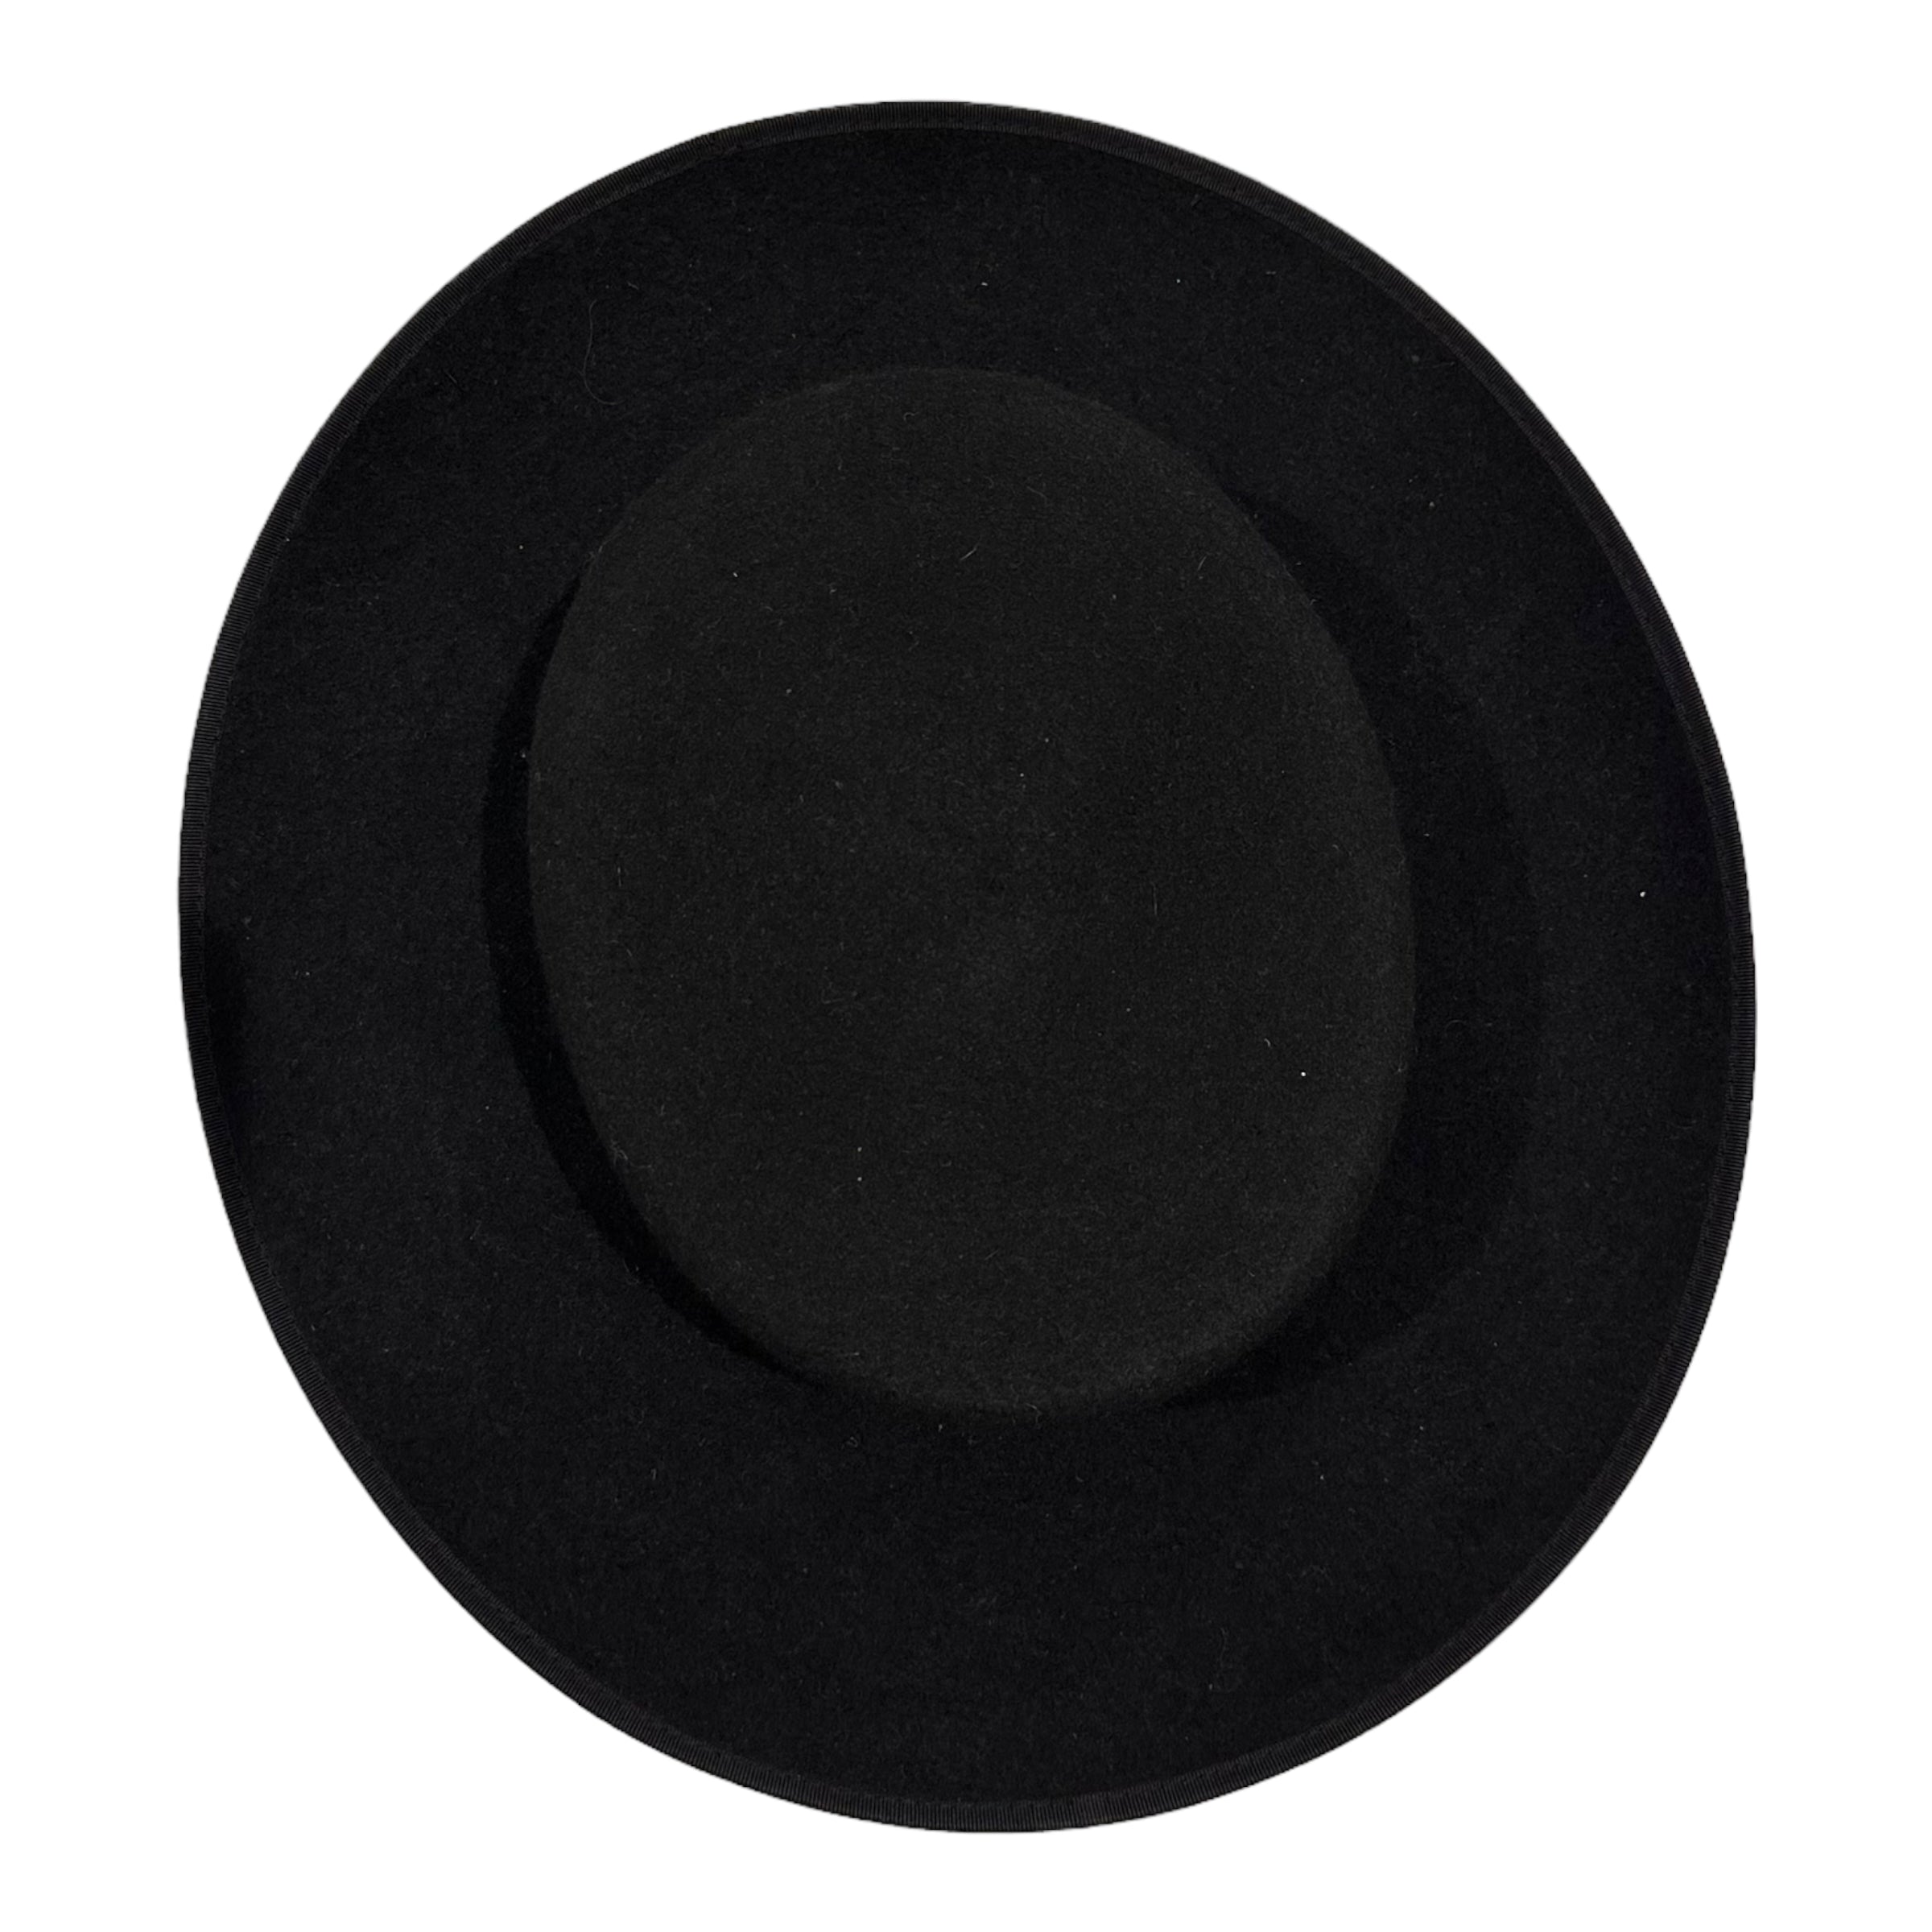 Vintage Black Wool Felt Boater Hat Size Medium